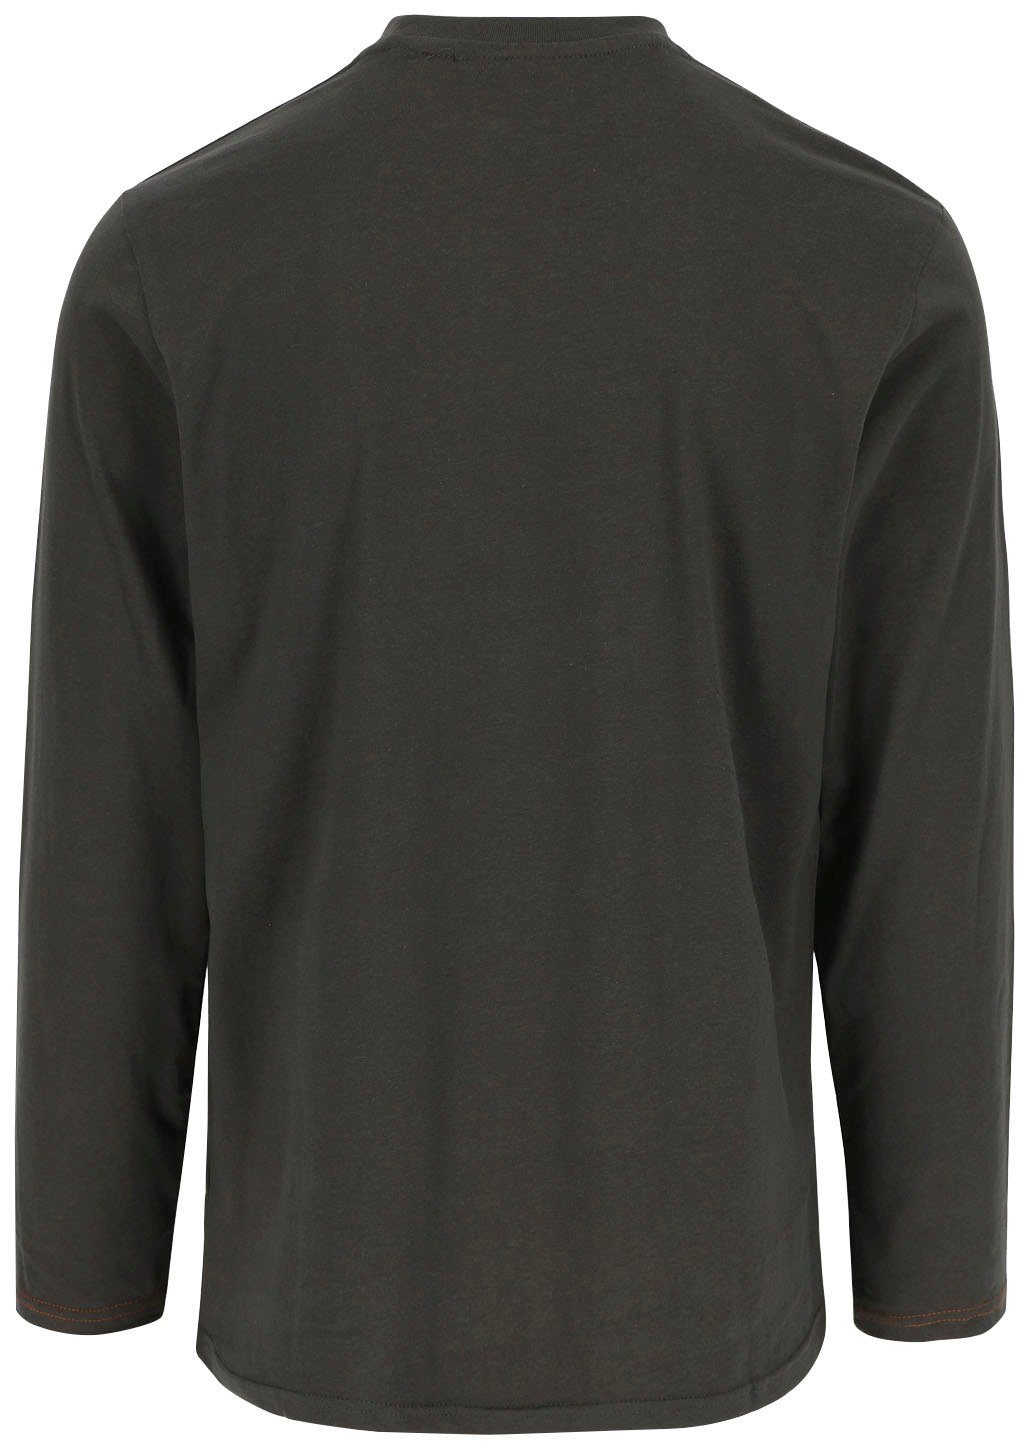 Herock Langarmshirt Noet t-shirt langärmlig vorgeschrumpfte % grau Baumwolle, angenehmes 100 Tragegefühl, Basic